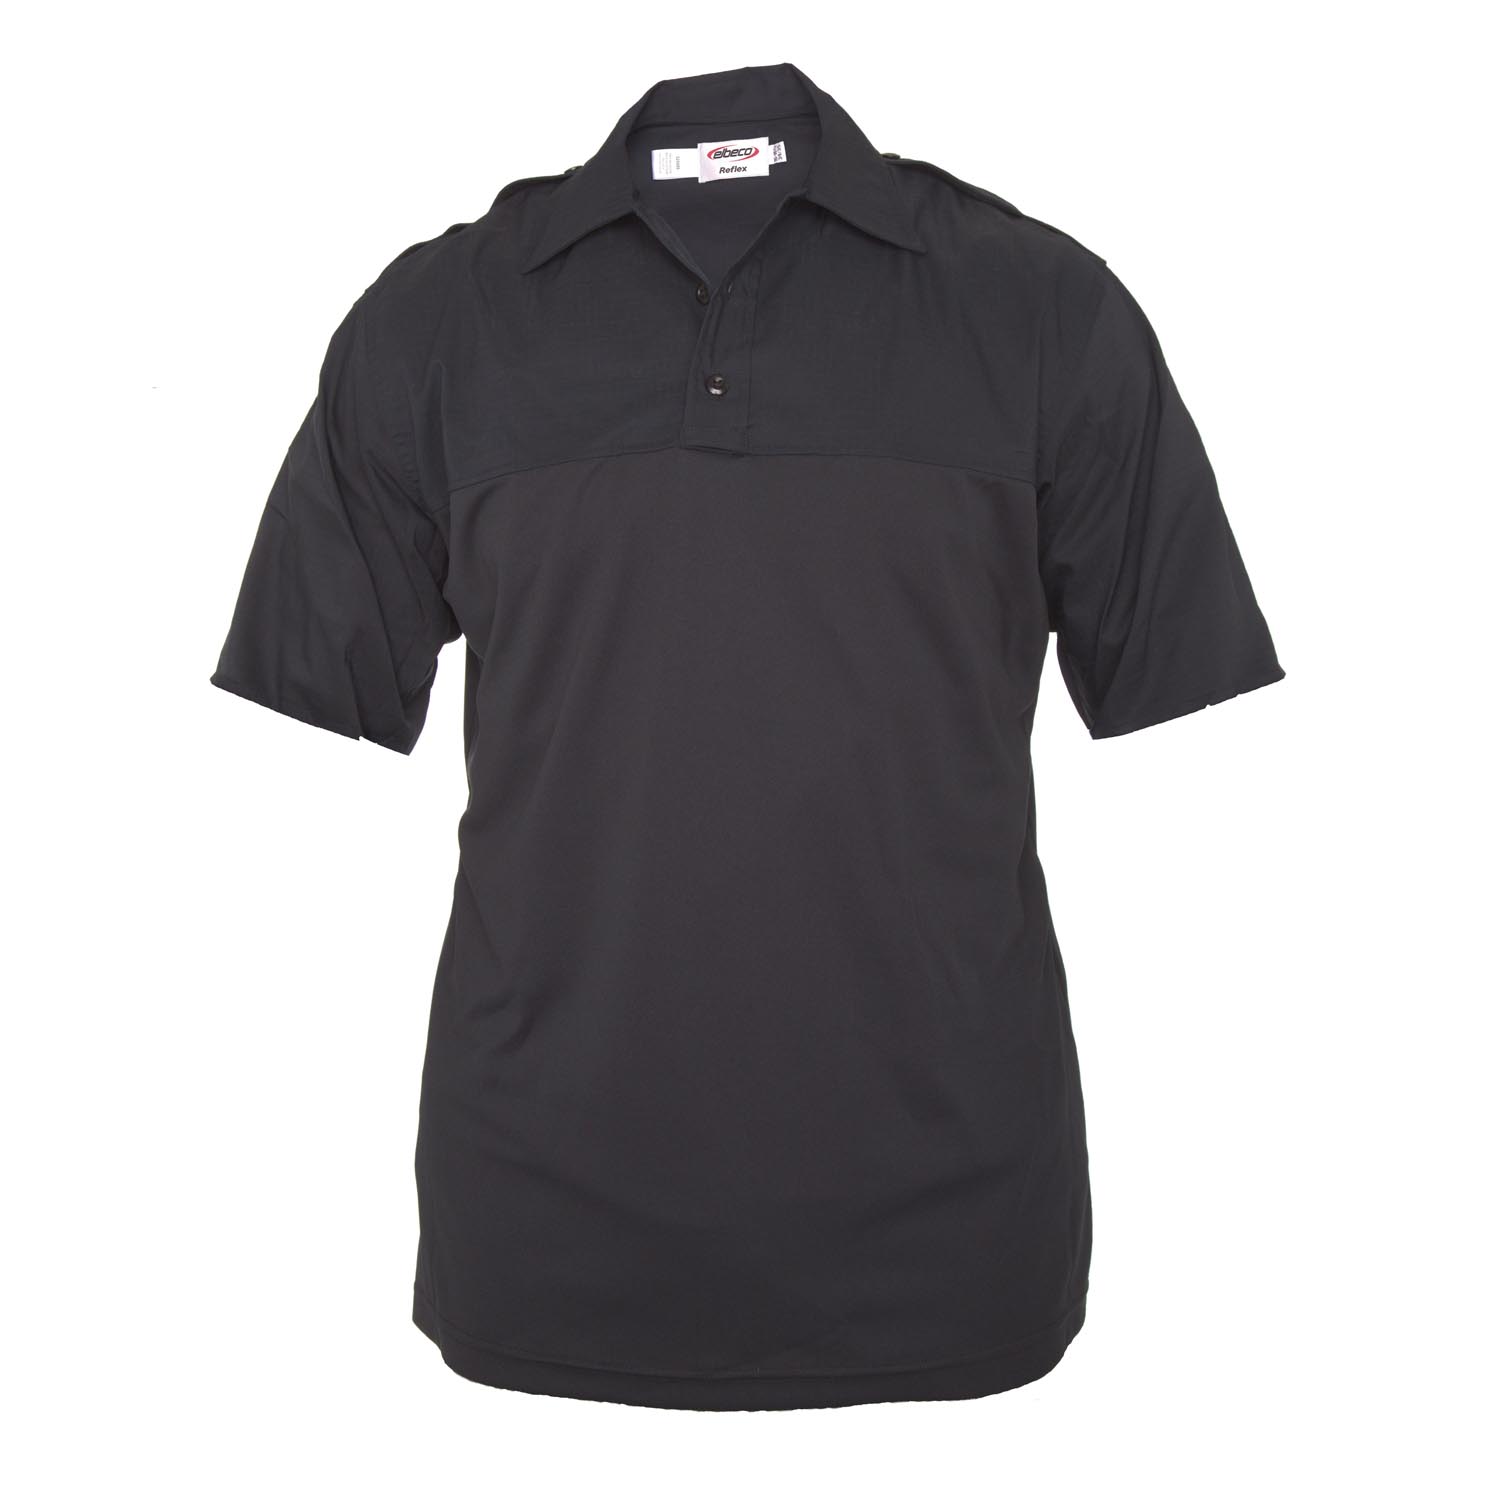 Elbeco Men's UV1 Reflex Short Sleeve Undervest Shirt